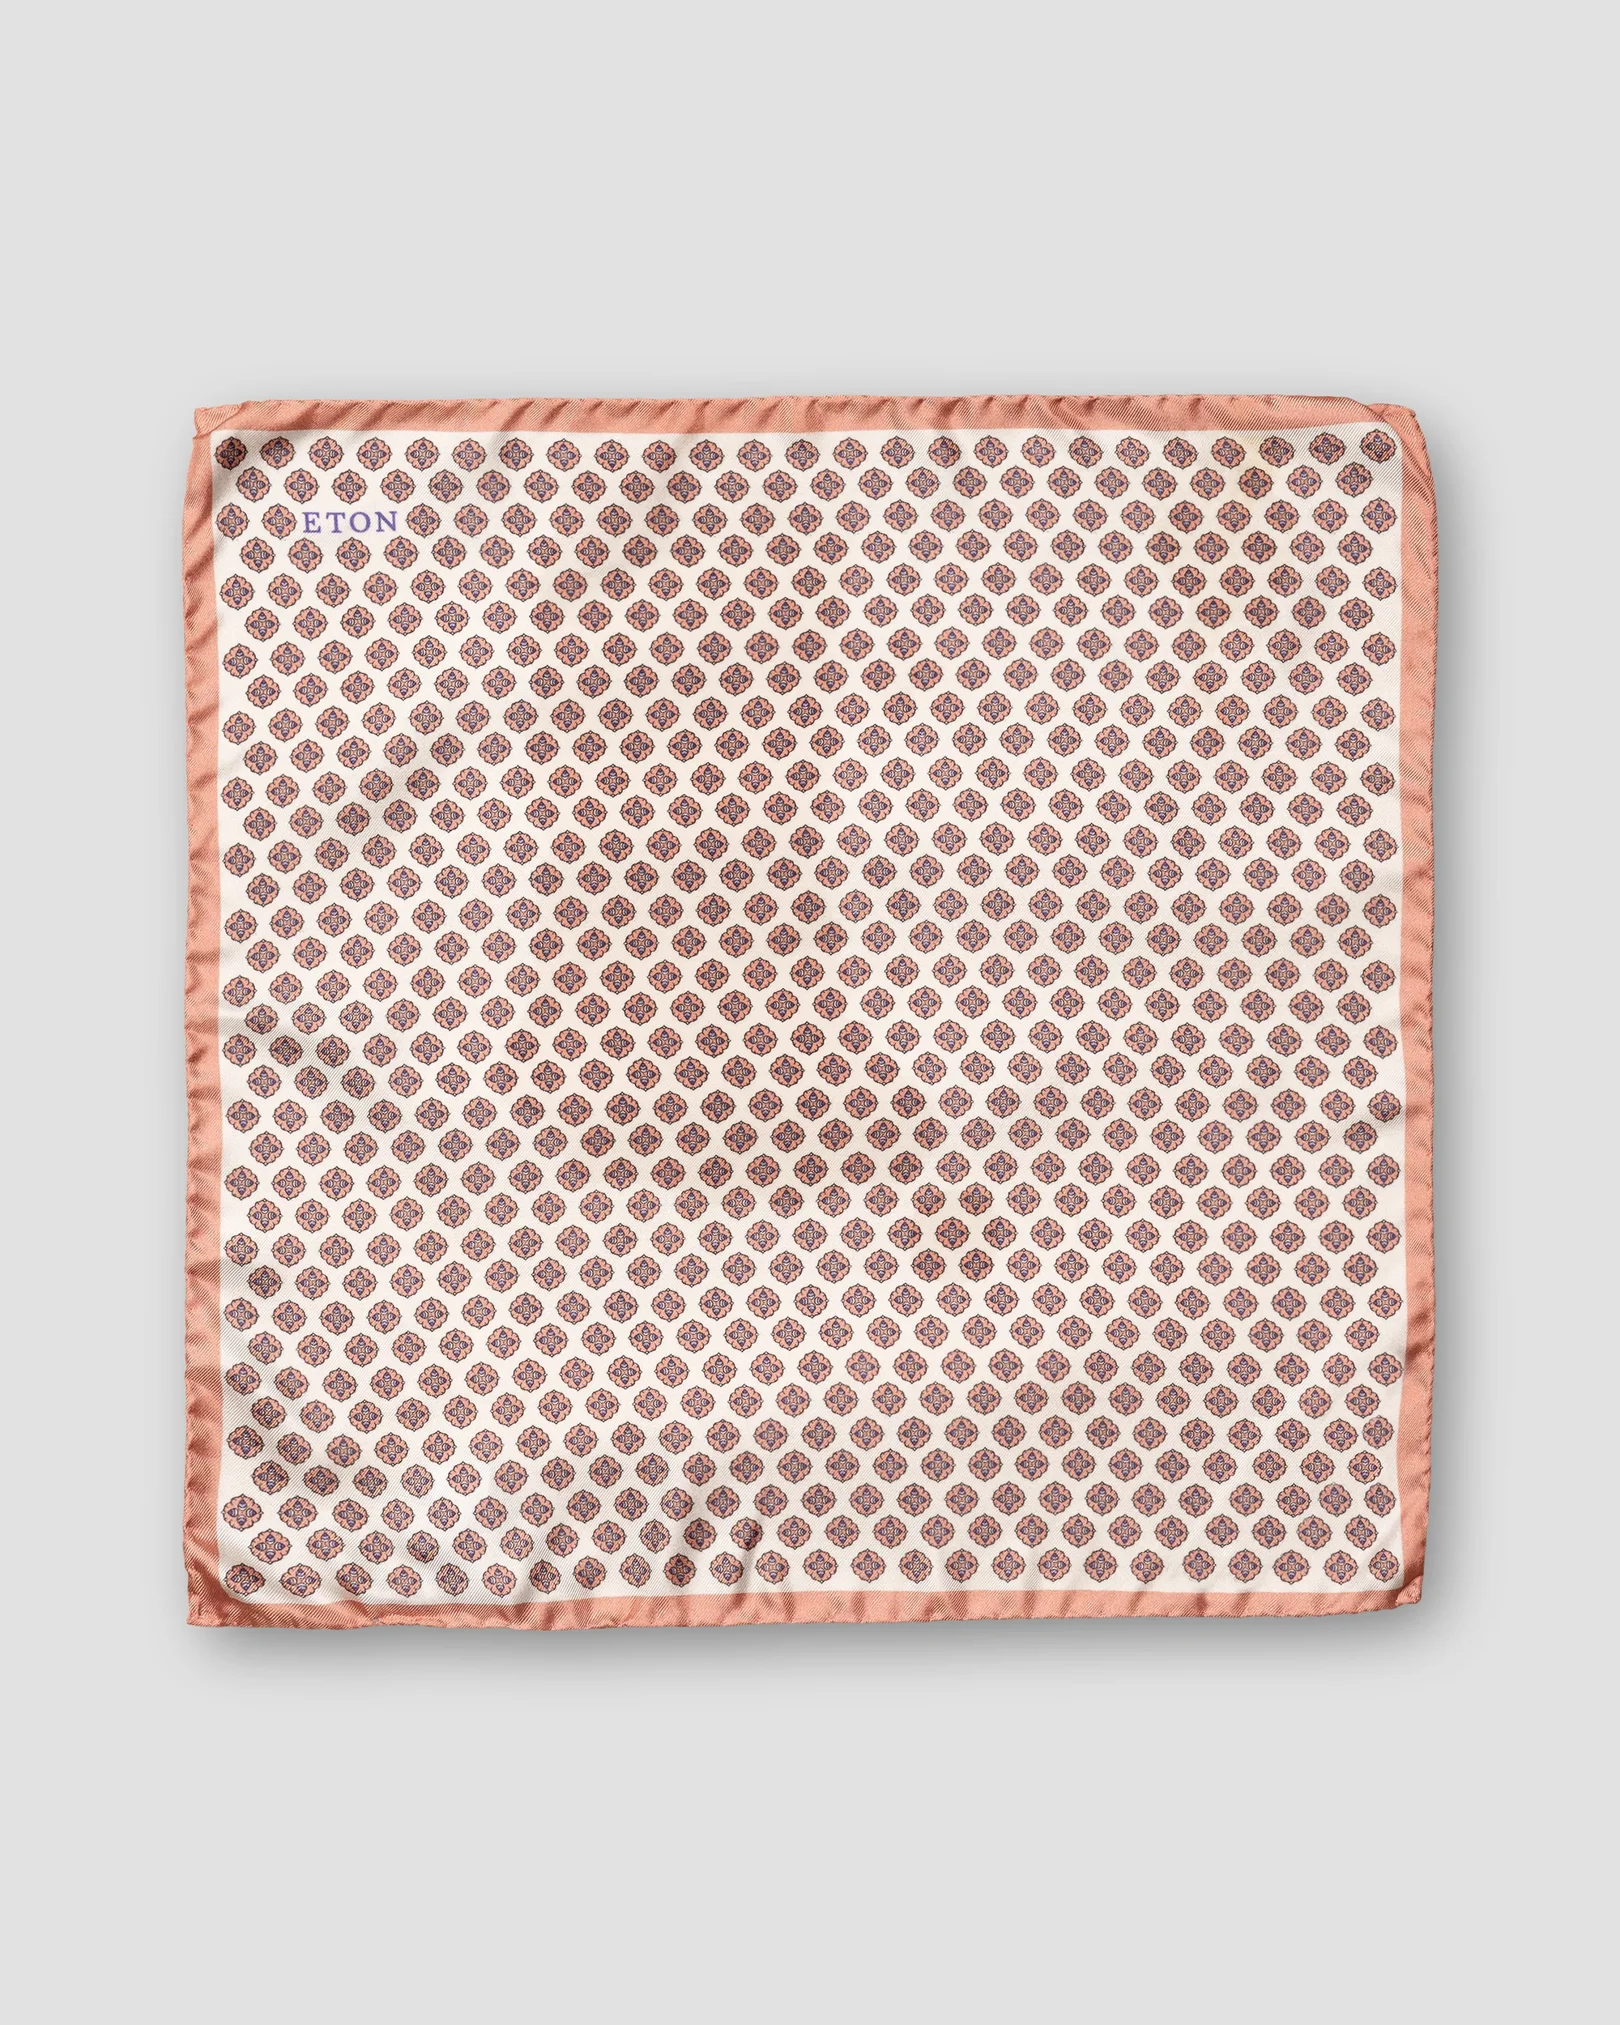 Eton - red geometric pocket square